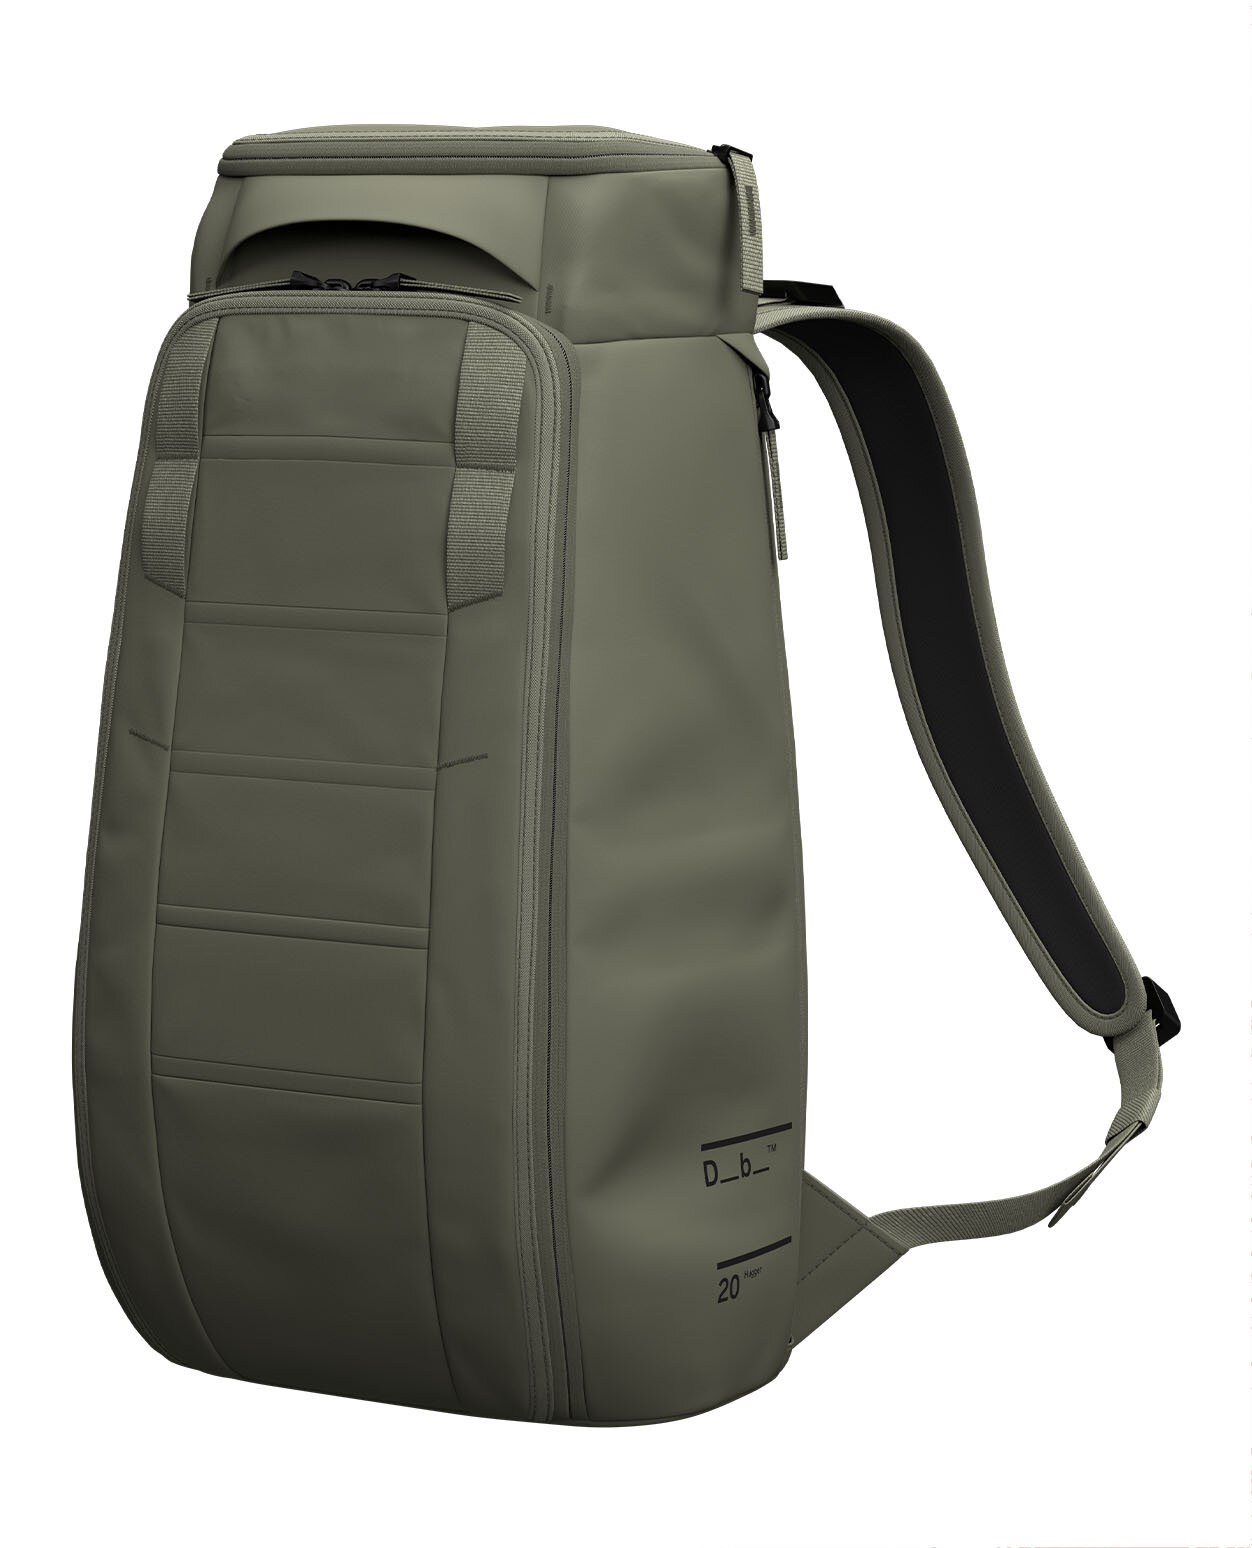 D_b_ Hugger Backpack 20L Moss Green